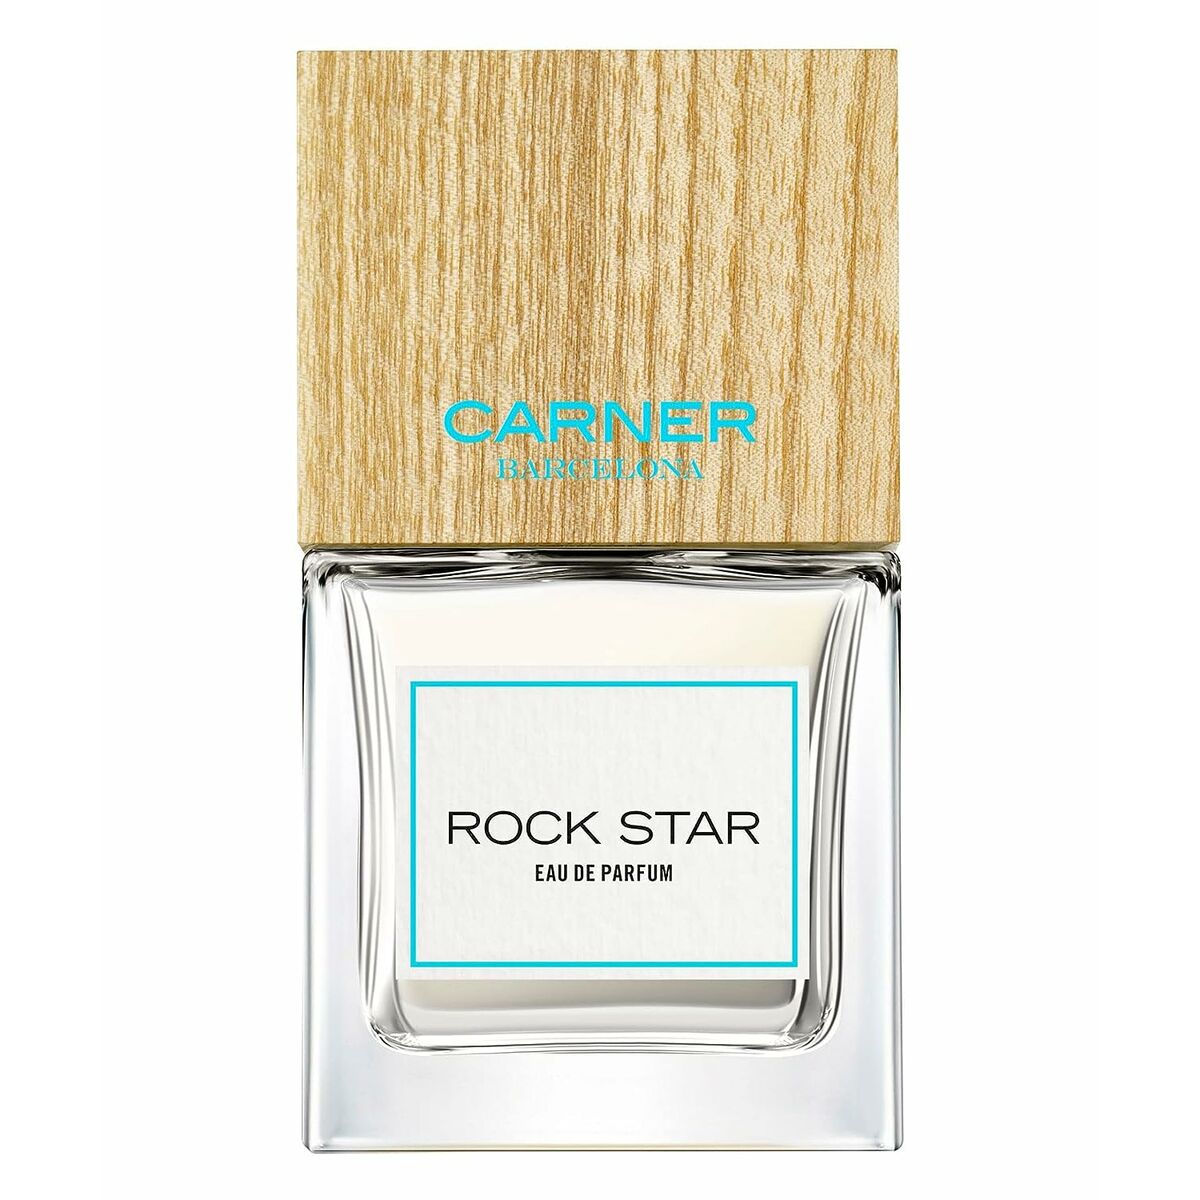 Uniseks Parfum Carner Barcelona EDP Rock Star 100 ml